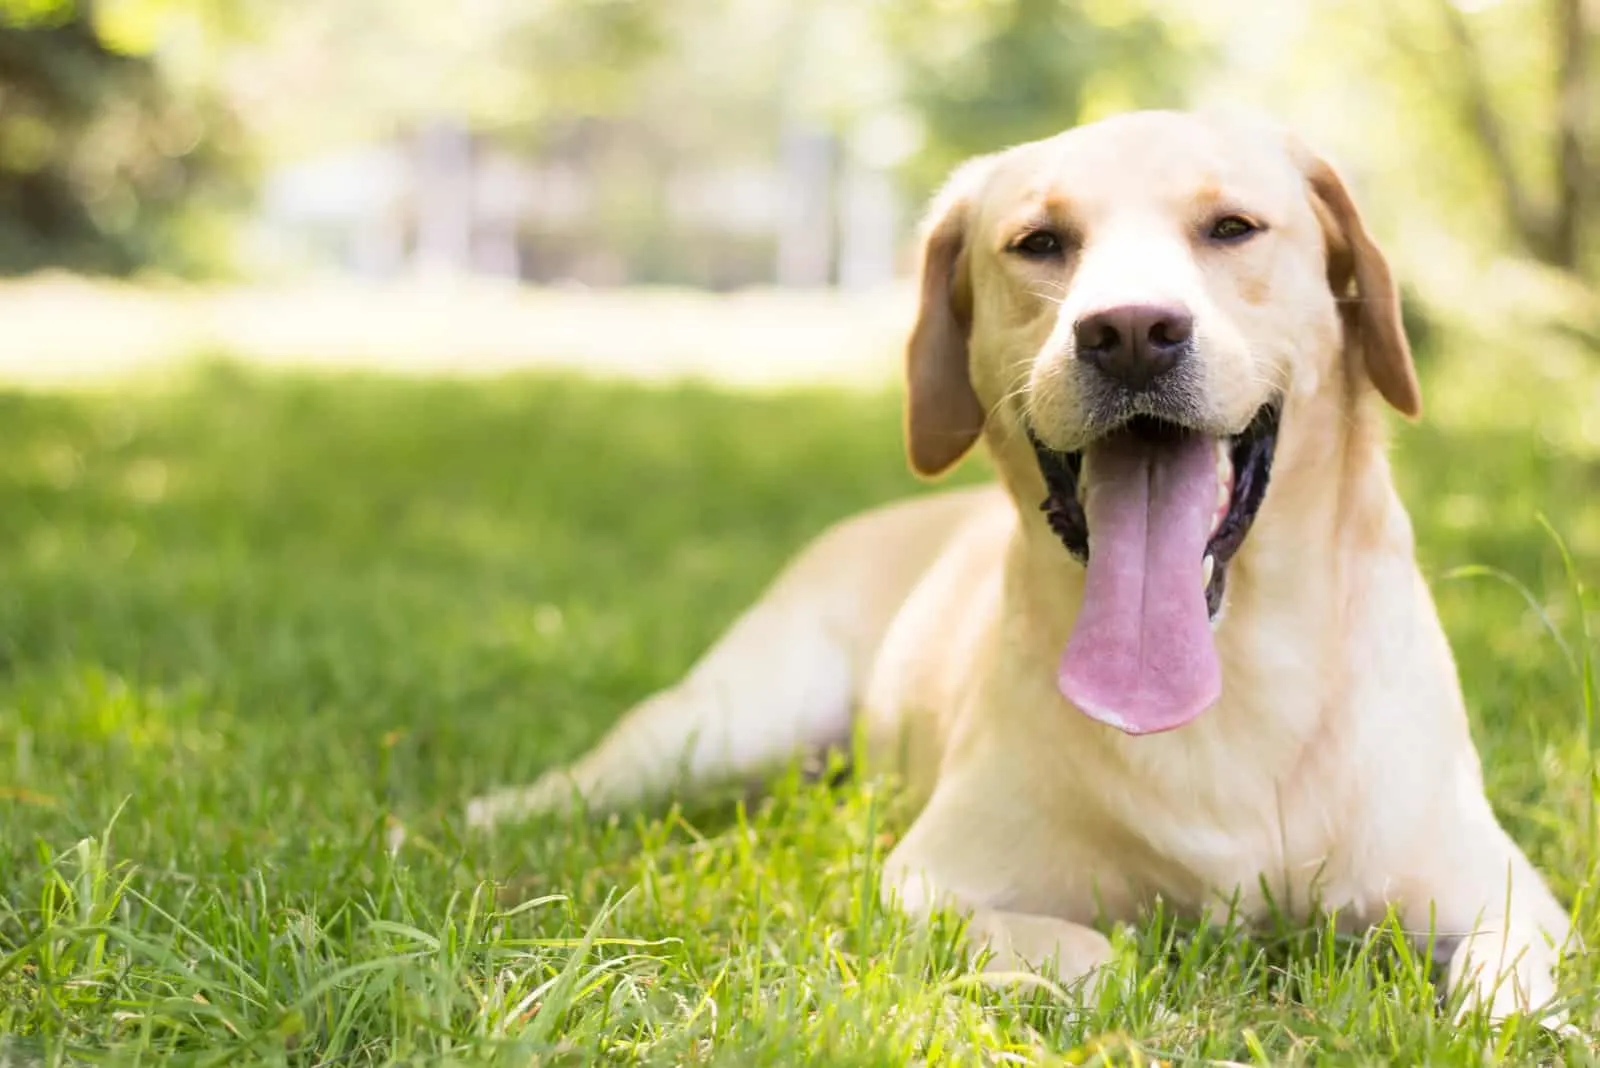 Smiling Labrador lies on the grass